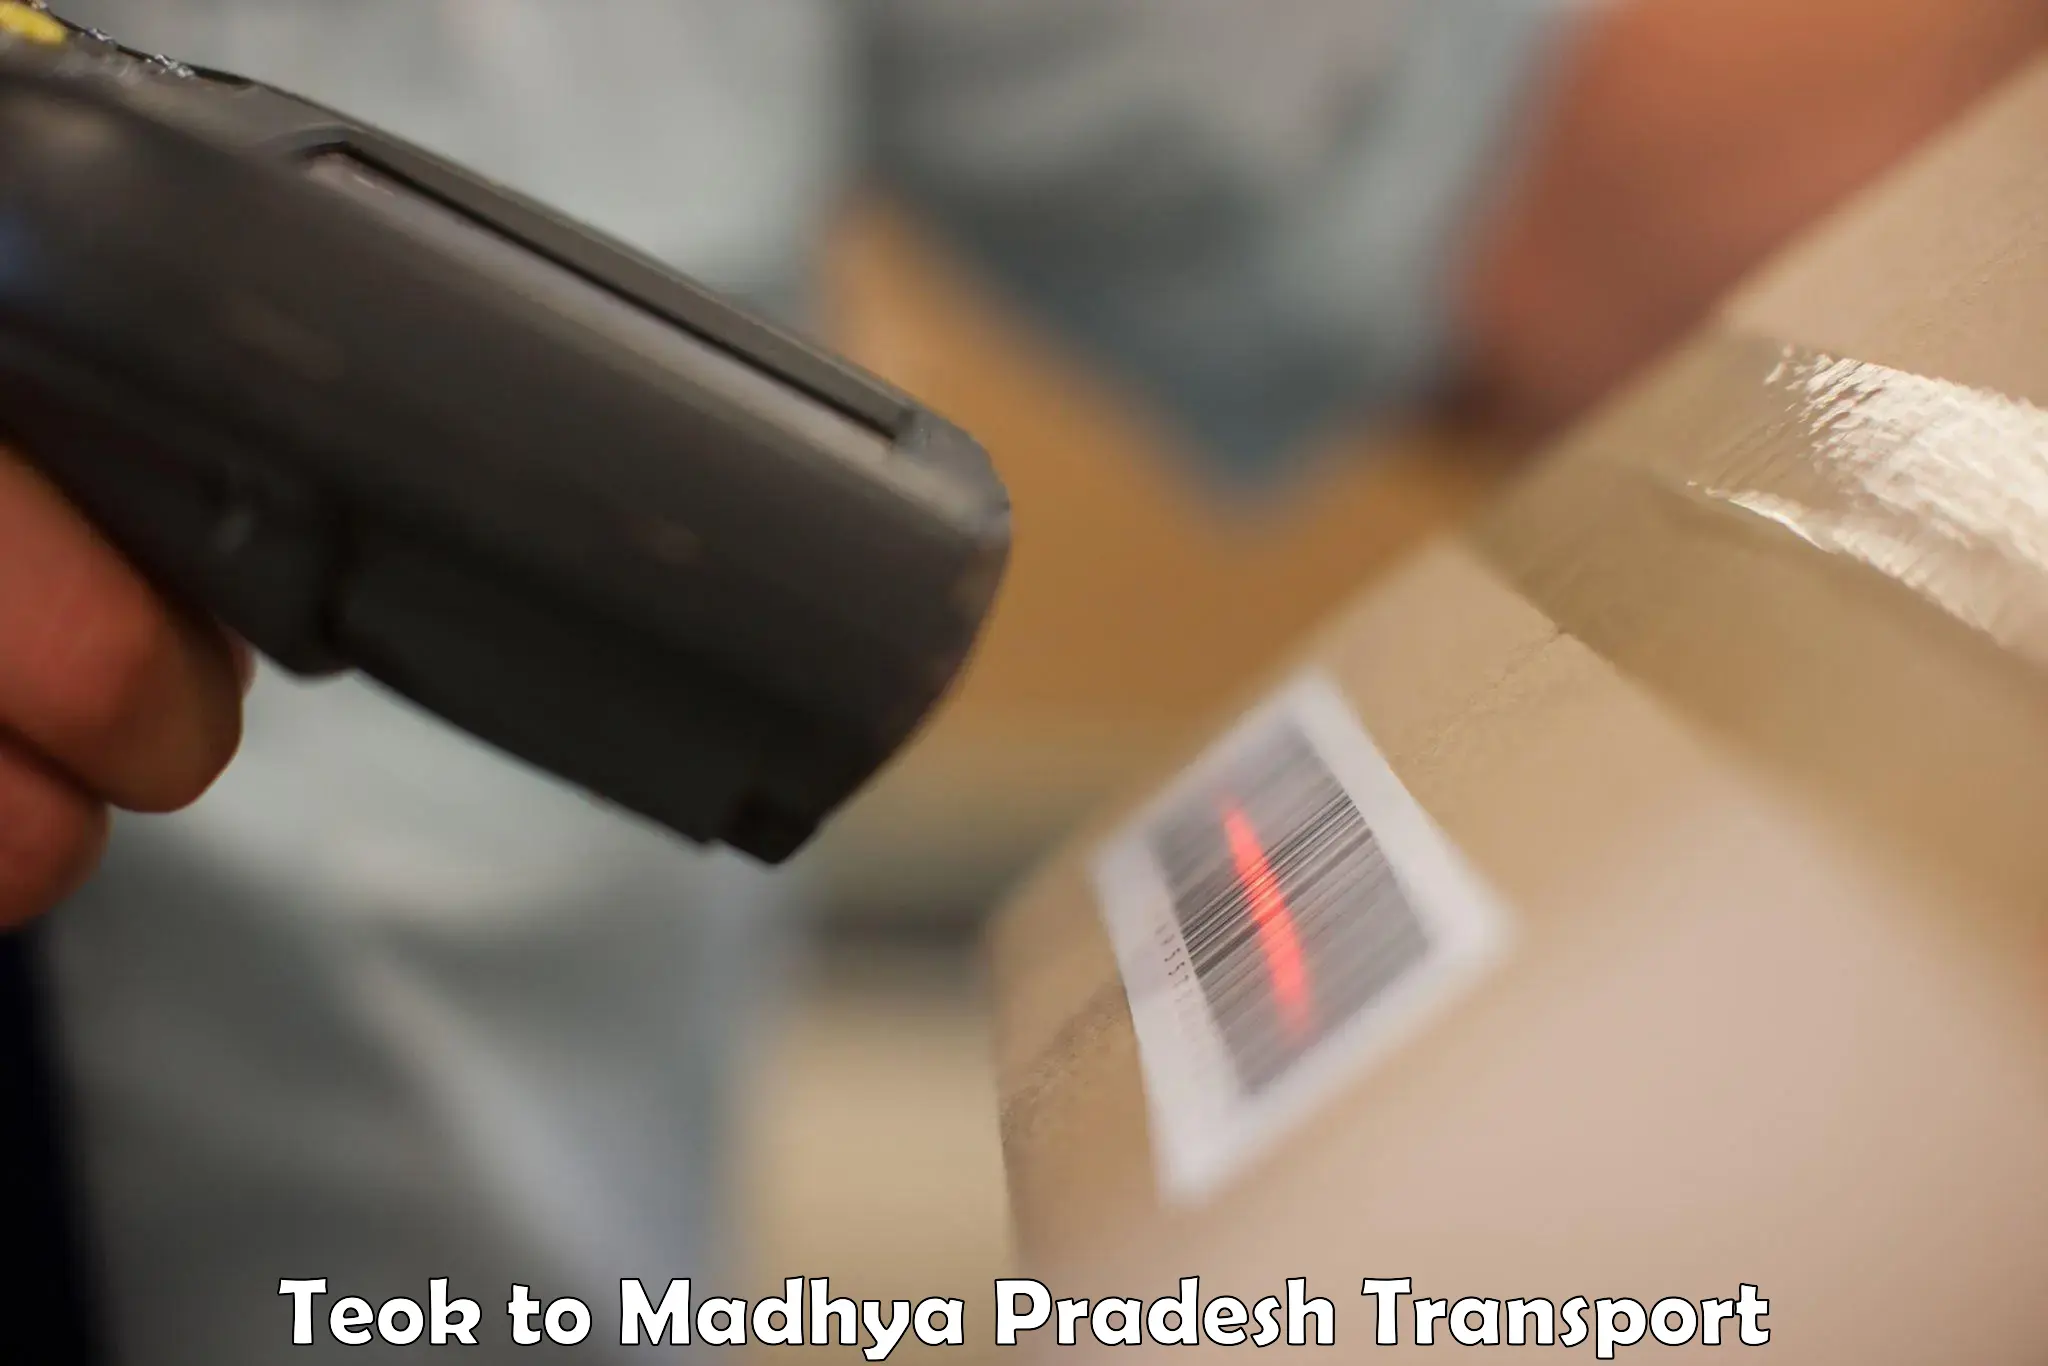 Goods delivery service Teok to Madhya Pradesh